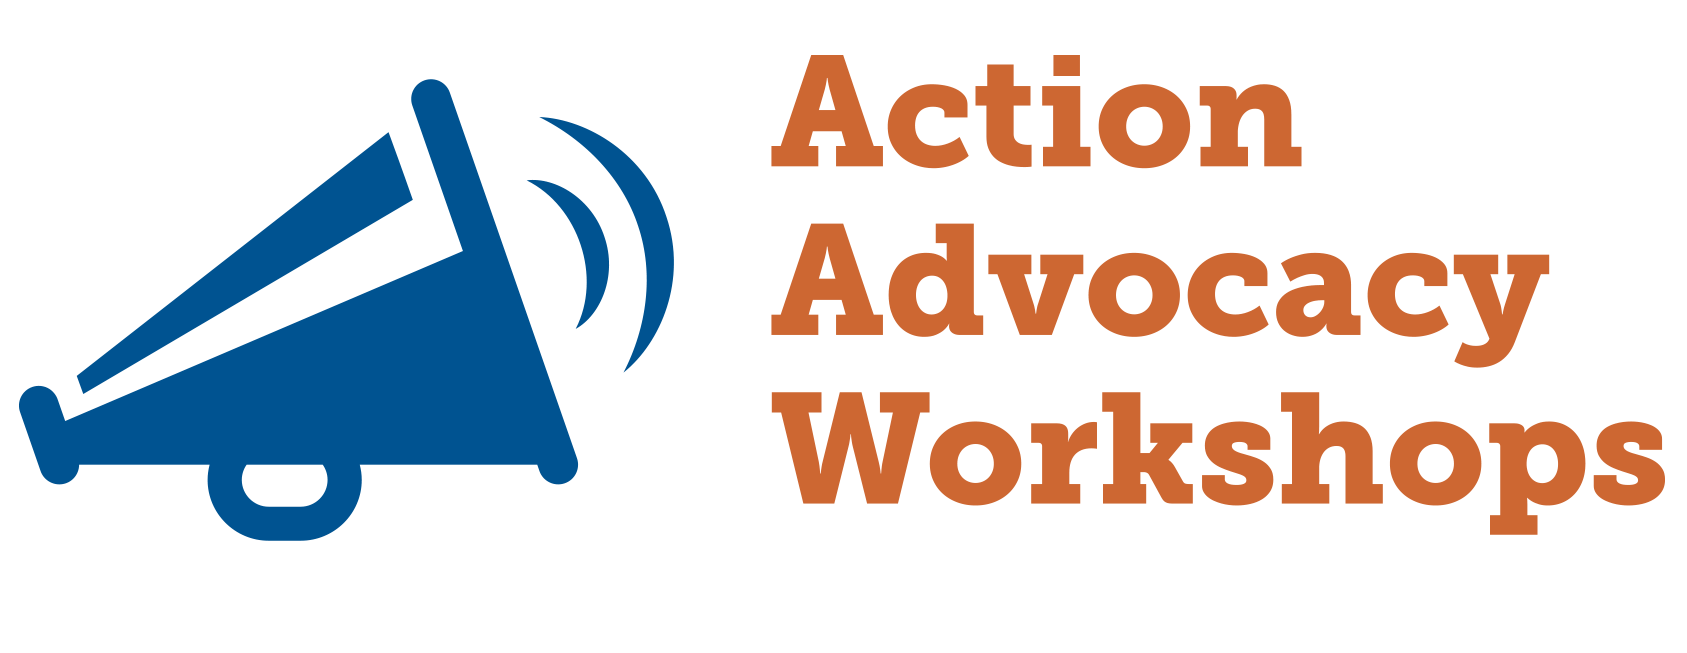 Advocacy Logo - Action Advocacy Workshops